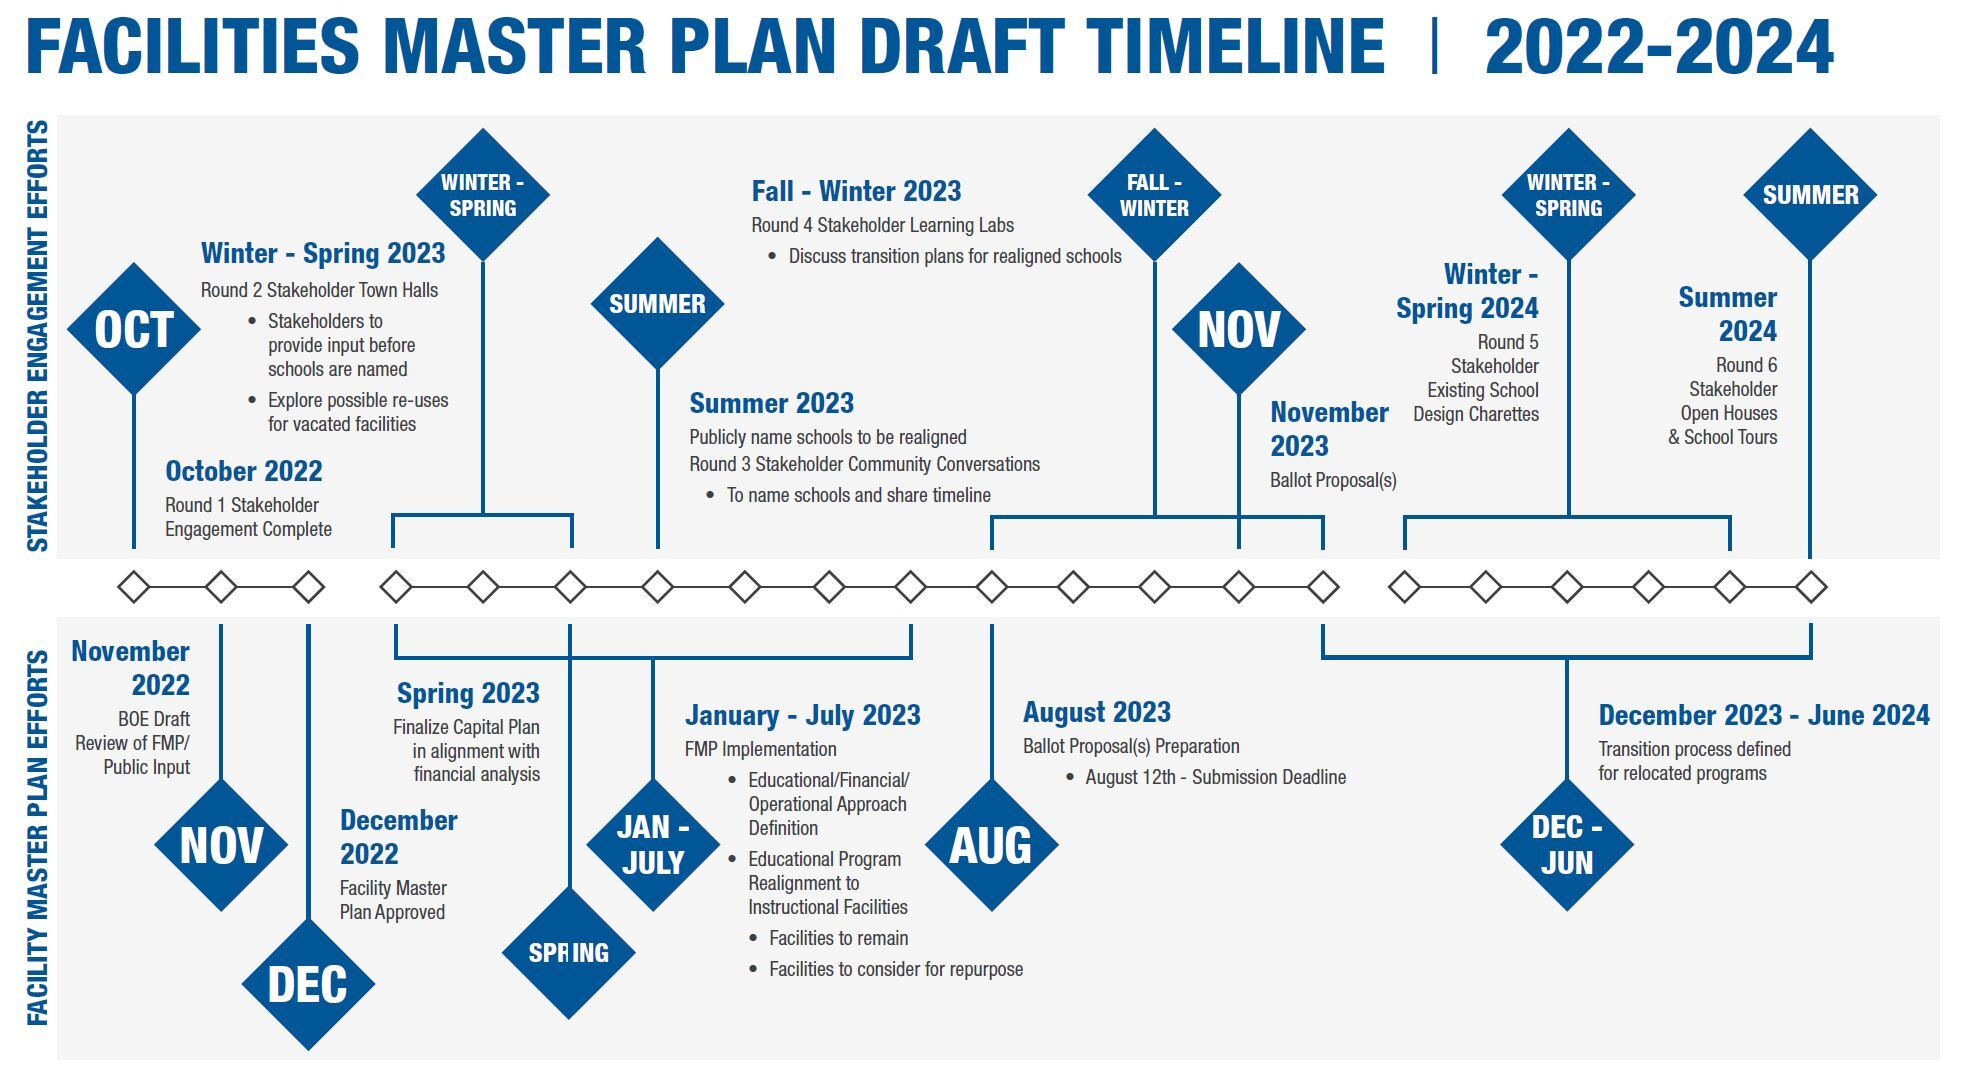 Facilities Master Plan Draft Timeline 2022-2024